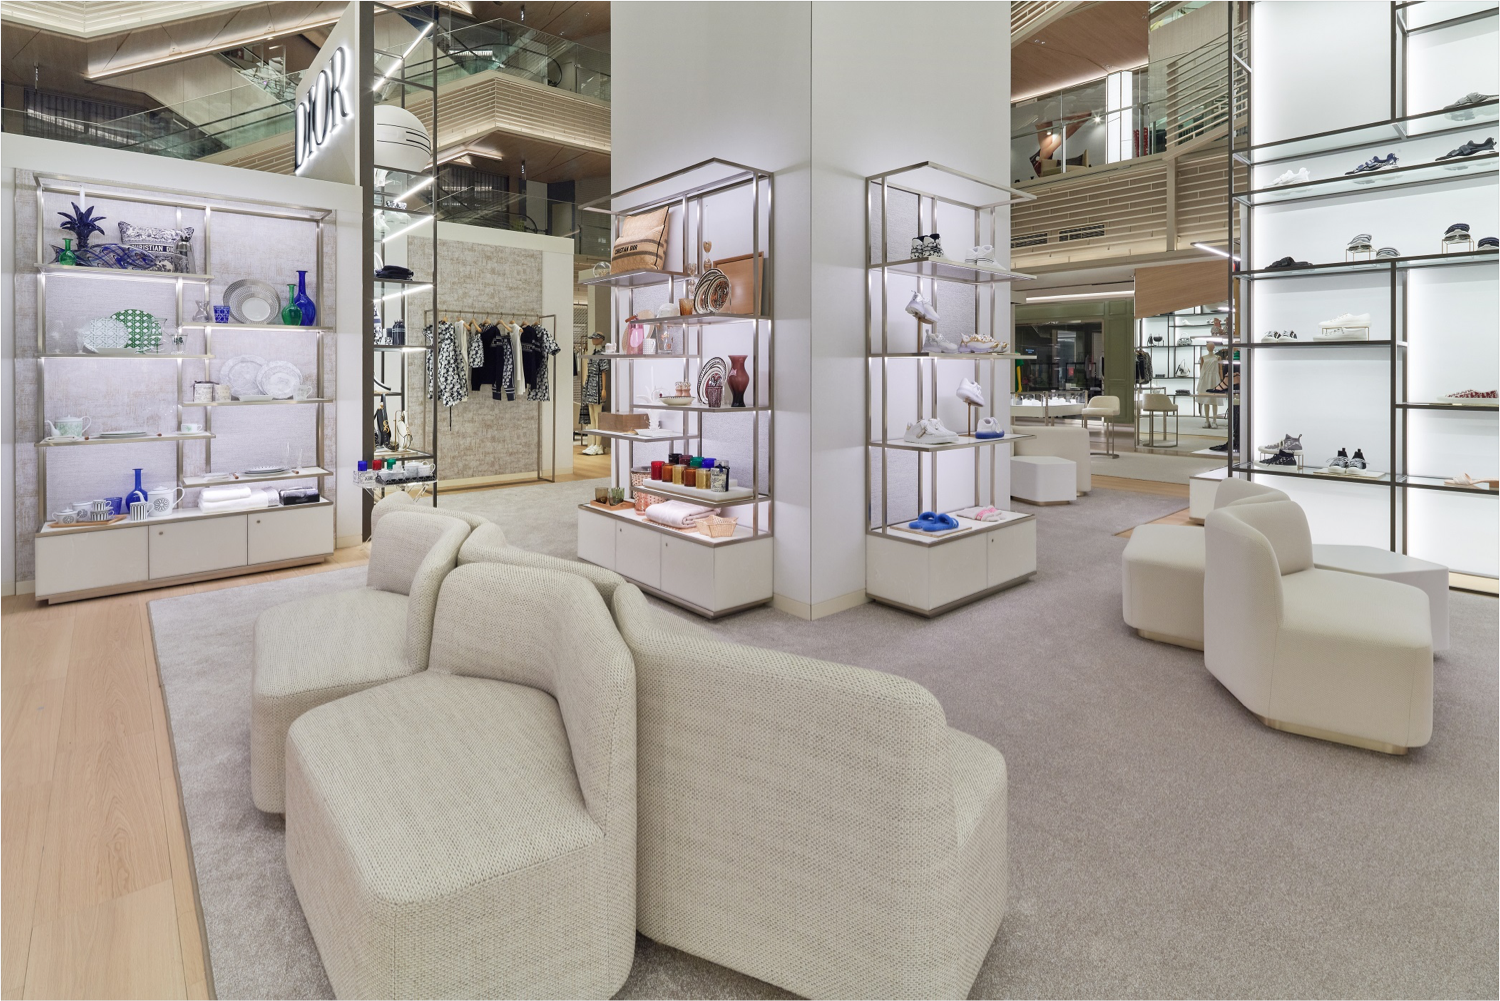 Dior: Catwalk – Design Museum Shop